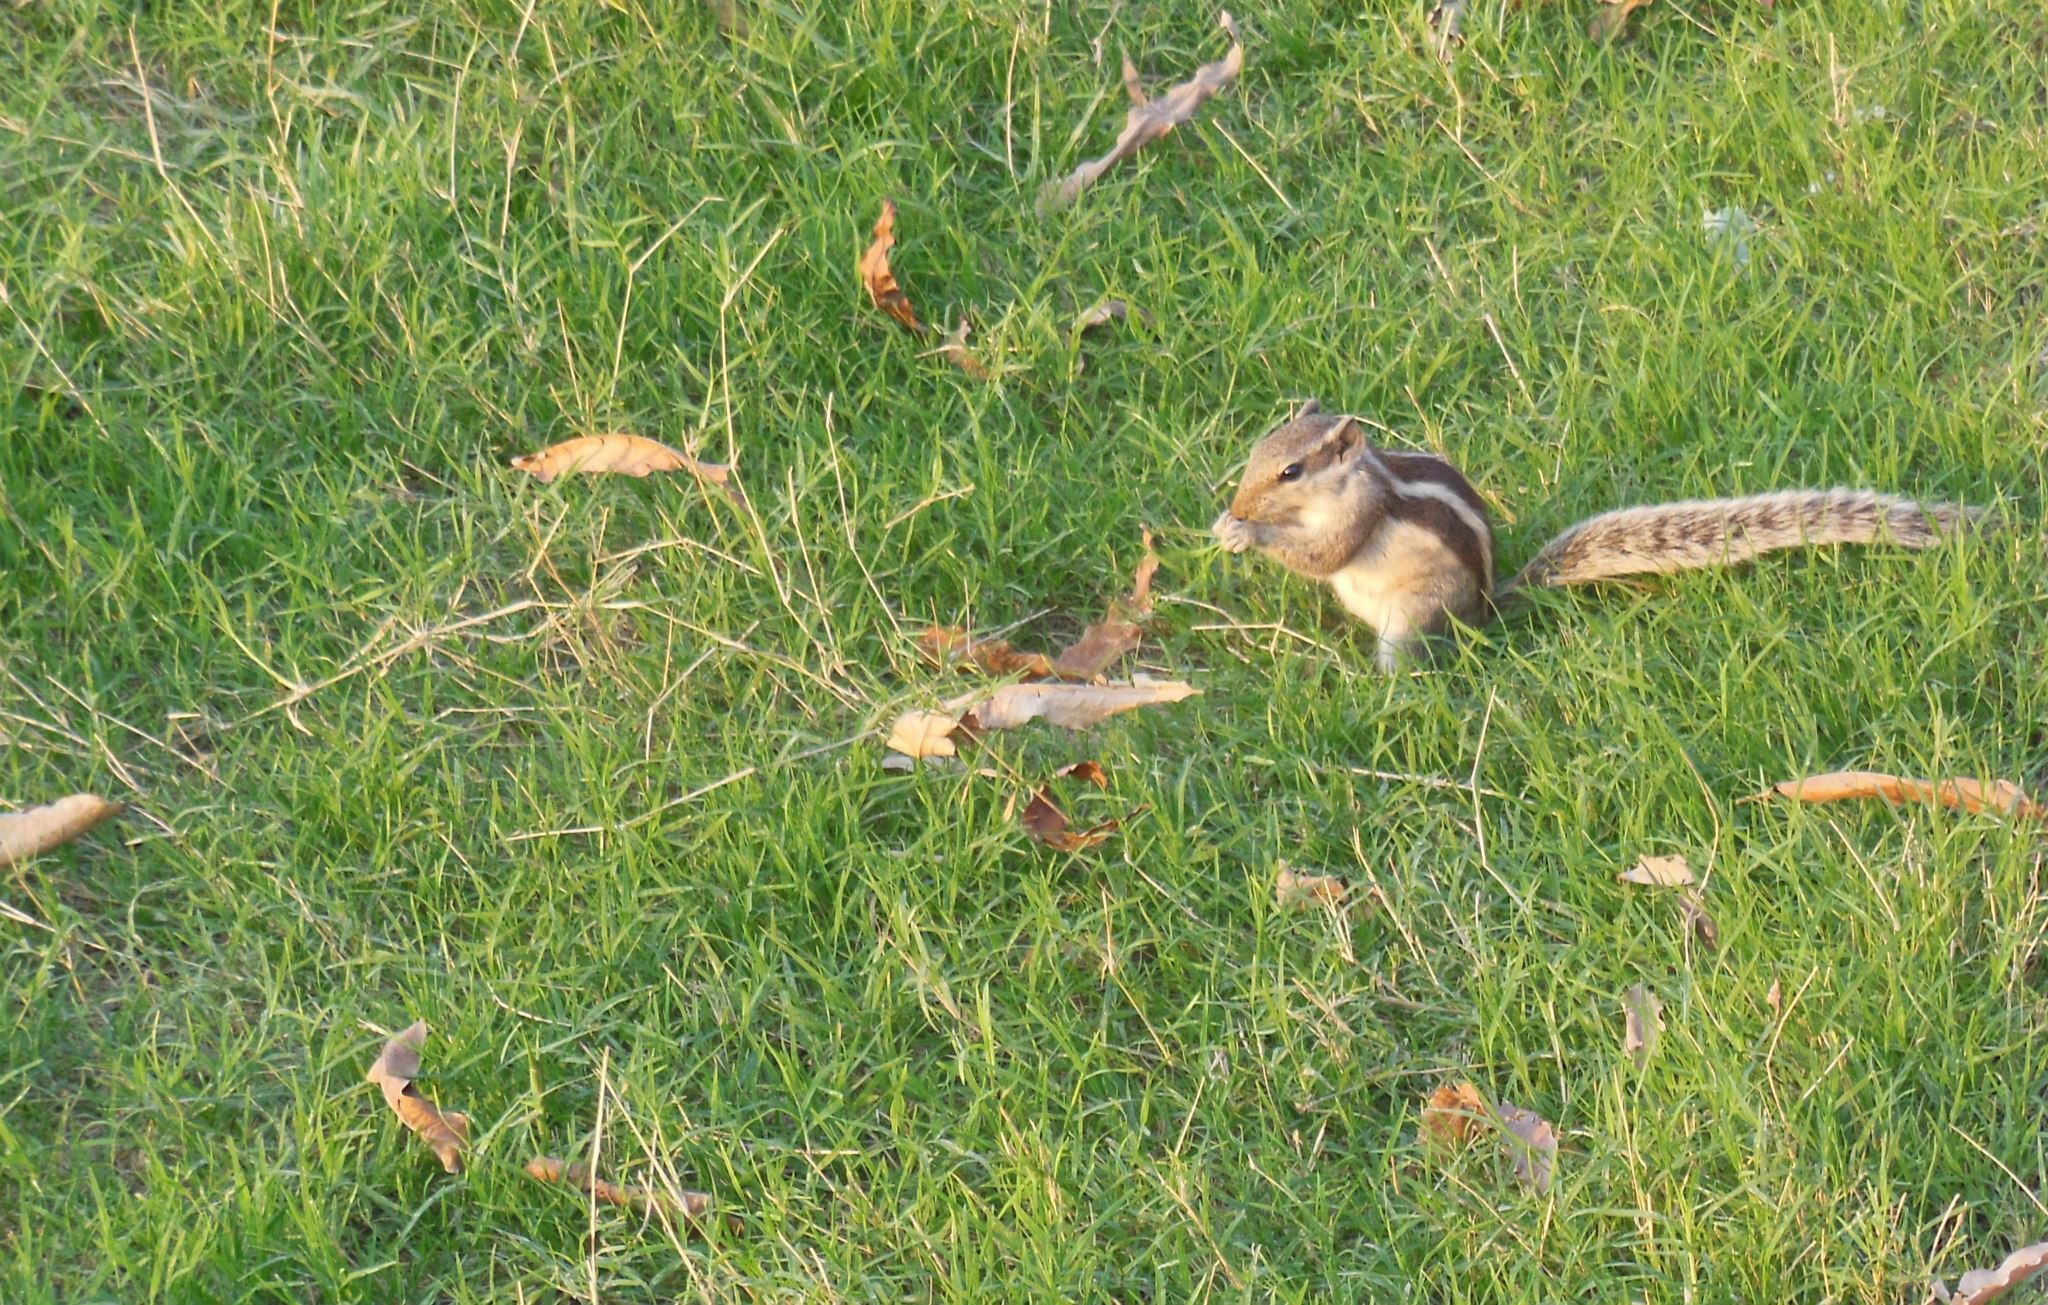 File:Chipmunk at grass field.jpg - Wikimedia Commons